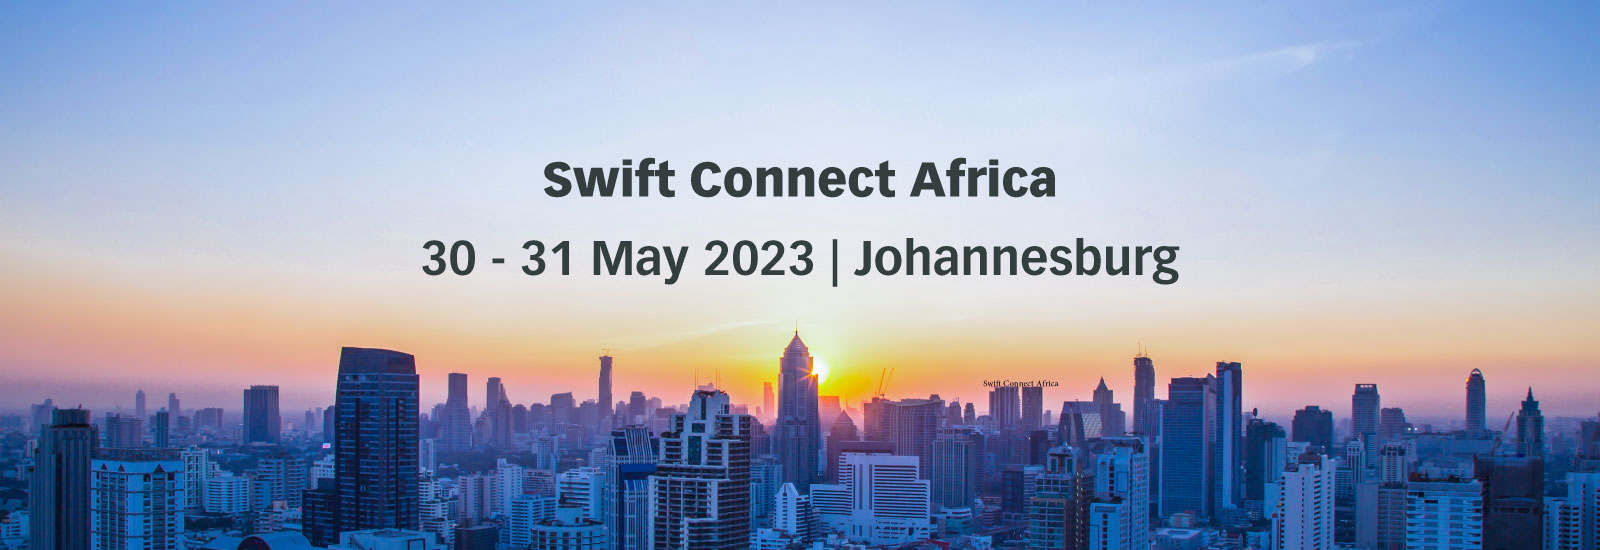 ProgressSoft at Swift Connect Africa 2023